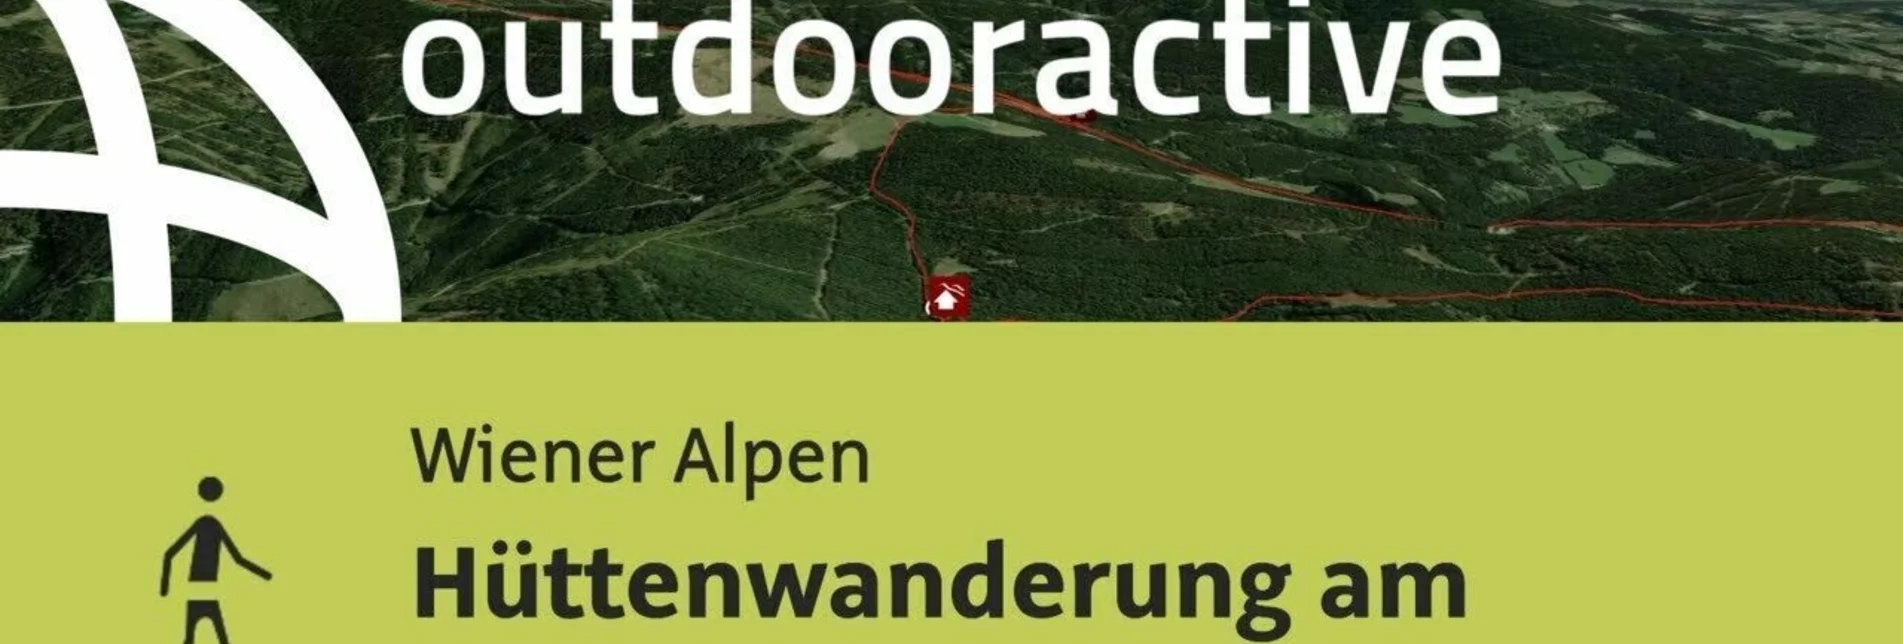 Wanderung Hüttenwanderung am Hochwechsel - Touren-Impression #1 | © Outdooractive – 3D Videos